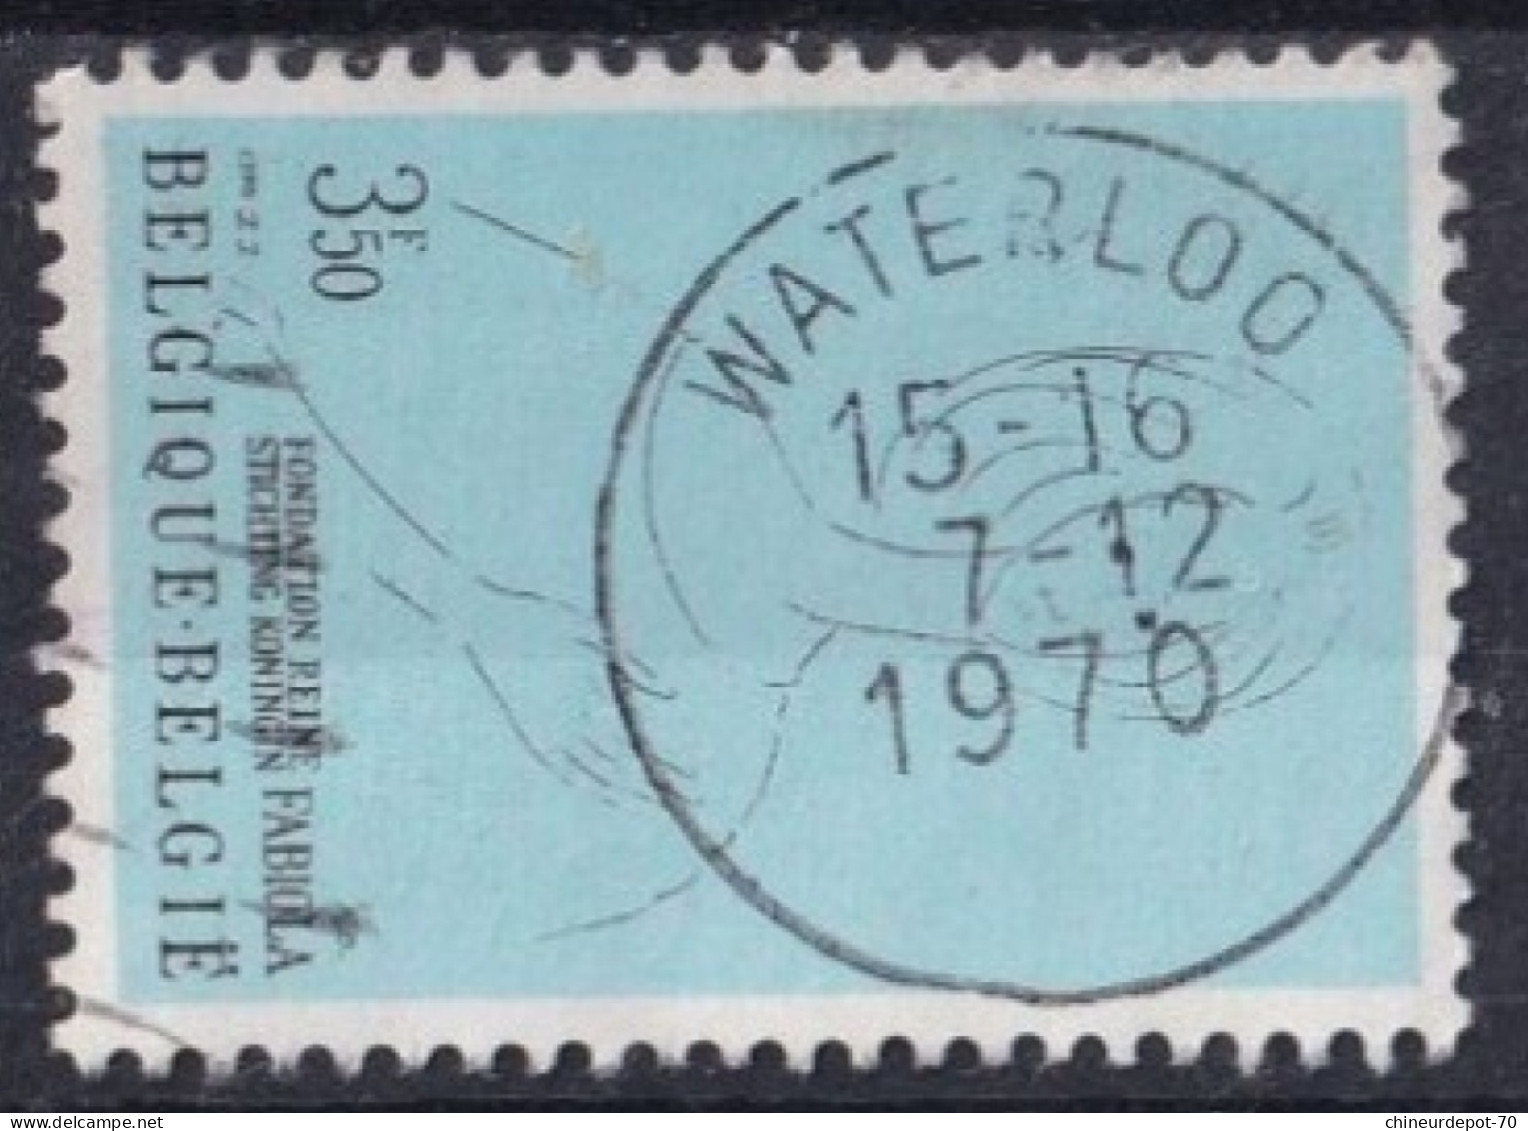 REINE FABIOLA WATERLOO BRUXELLES EKEREN SENEFFE VERVIERS ST GILLES LIEGE ST HUBERT BASTOGNE - Used Stamps